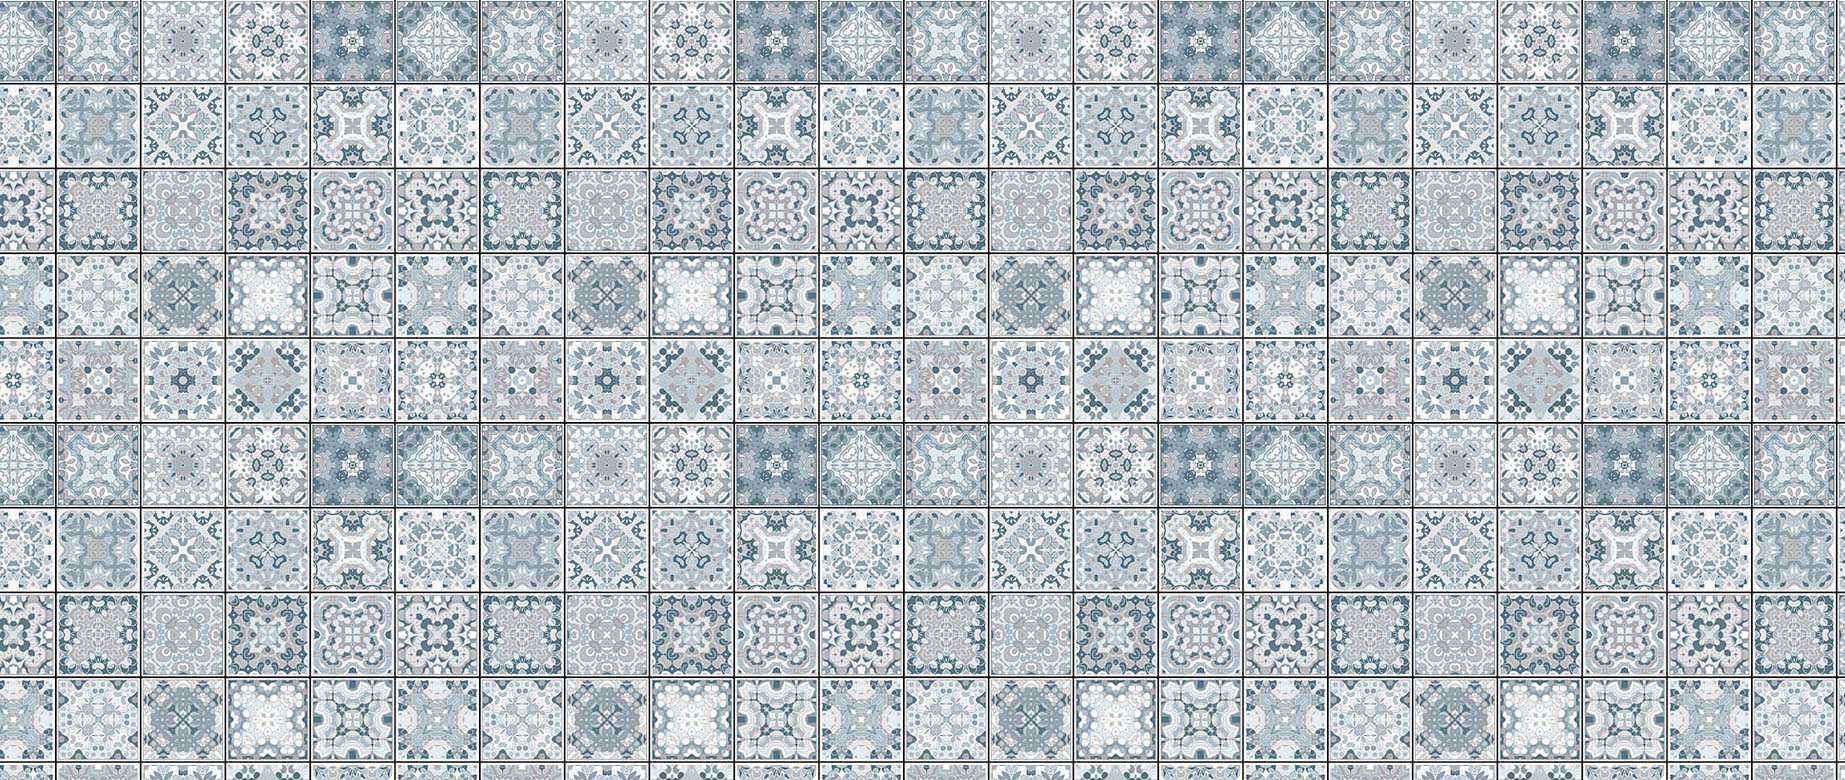 white-teal-mosaic-geometric-tile-wallpaper-view